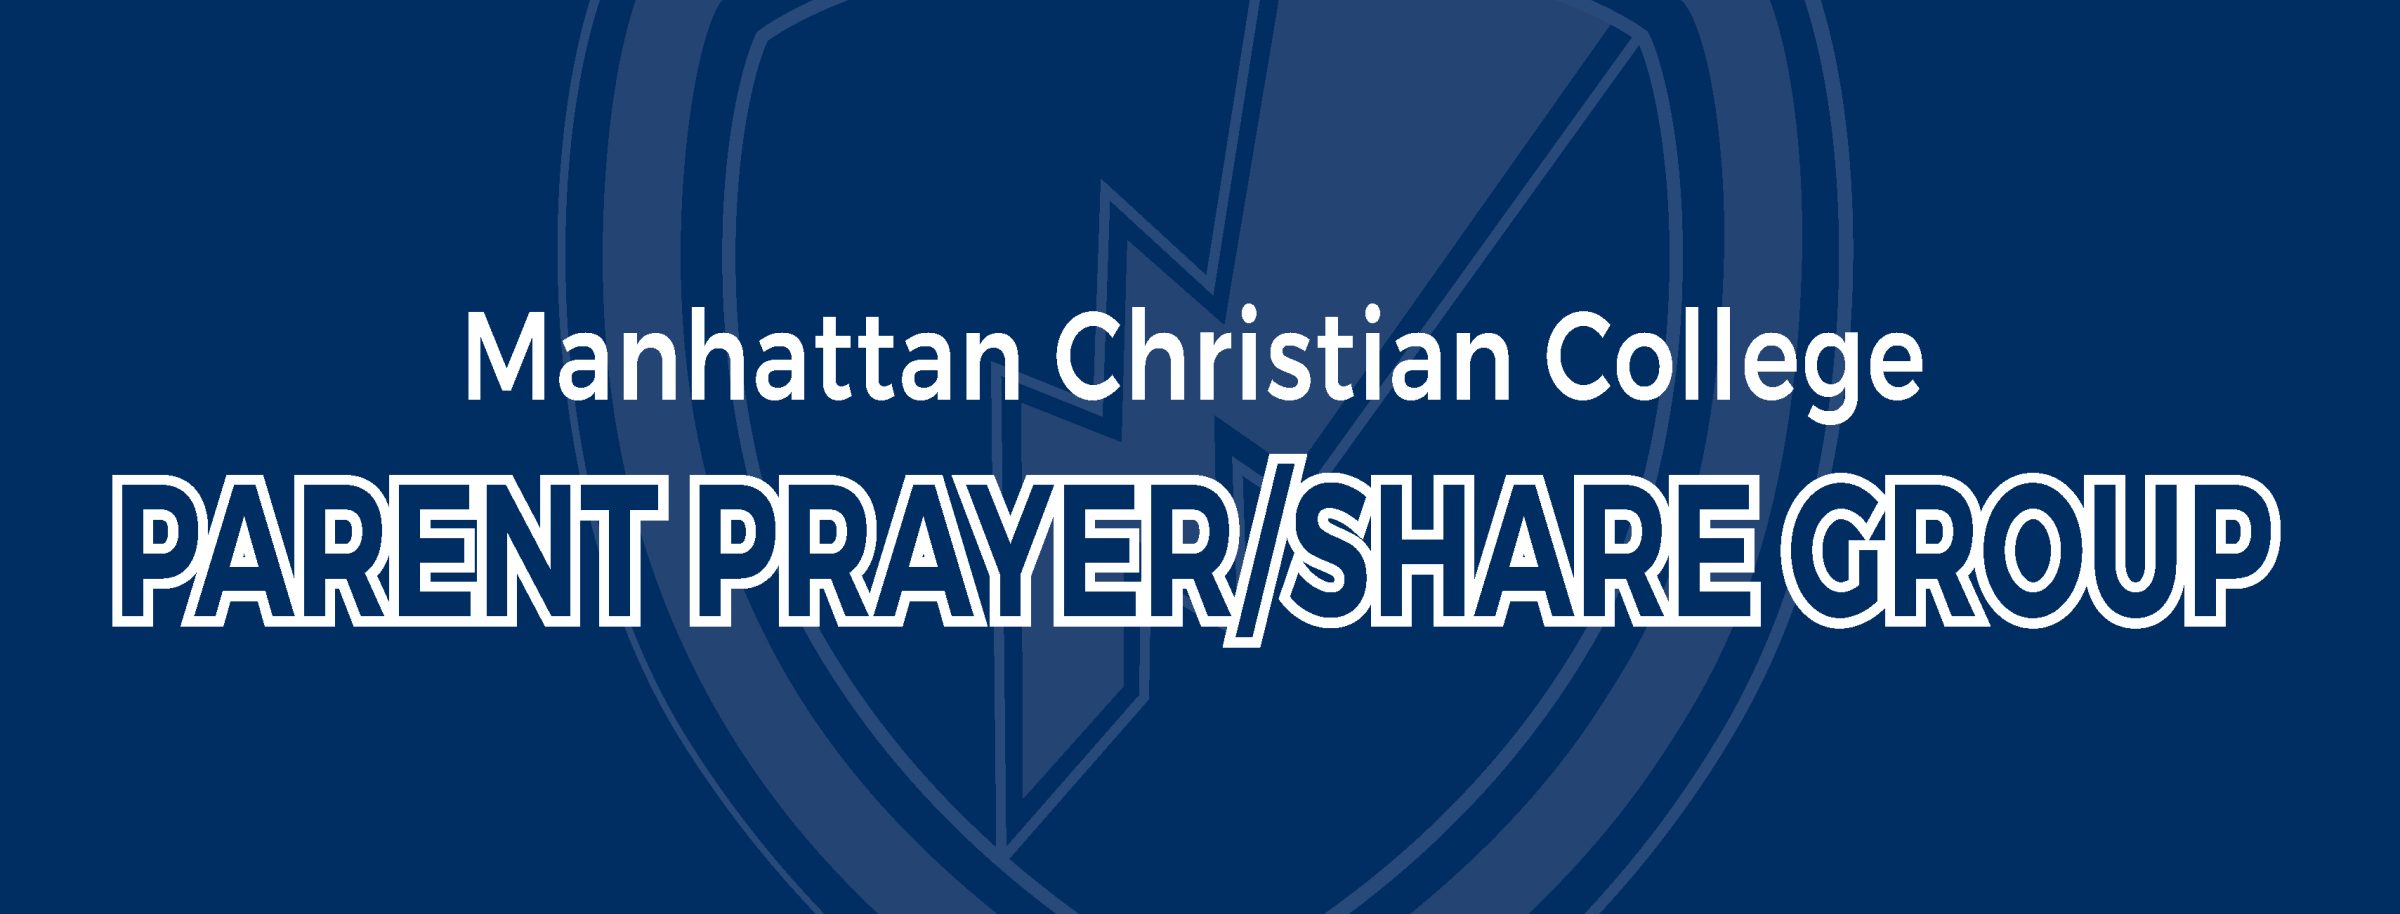 Parent prayer/share group